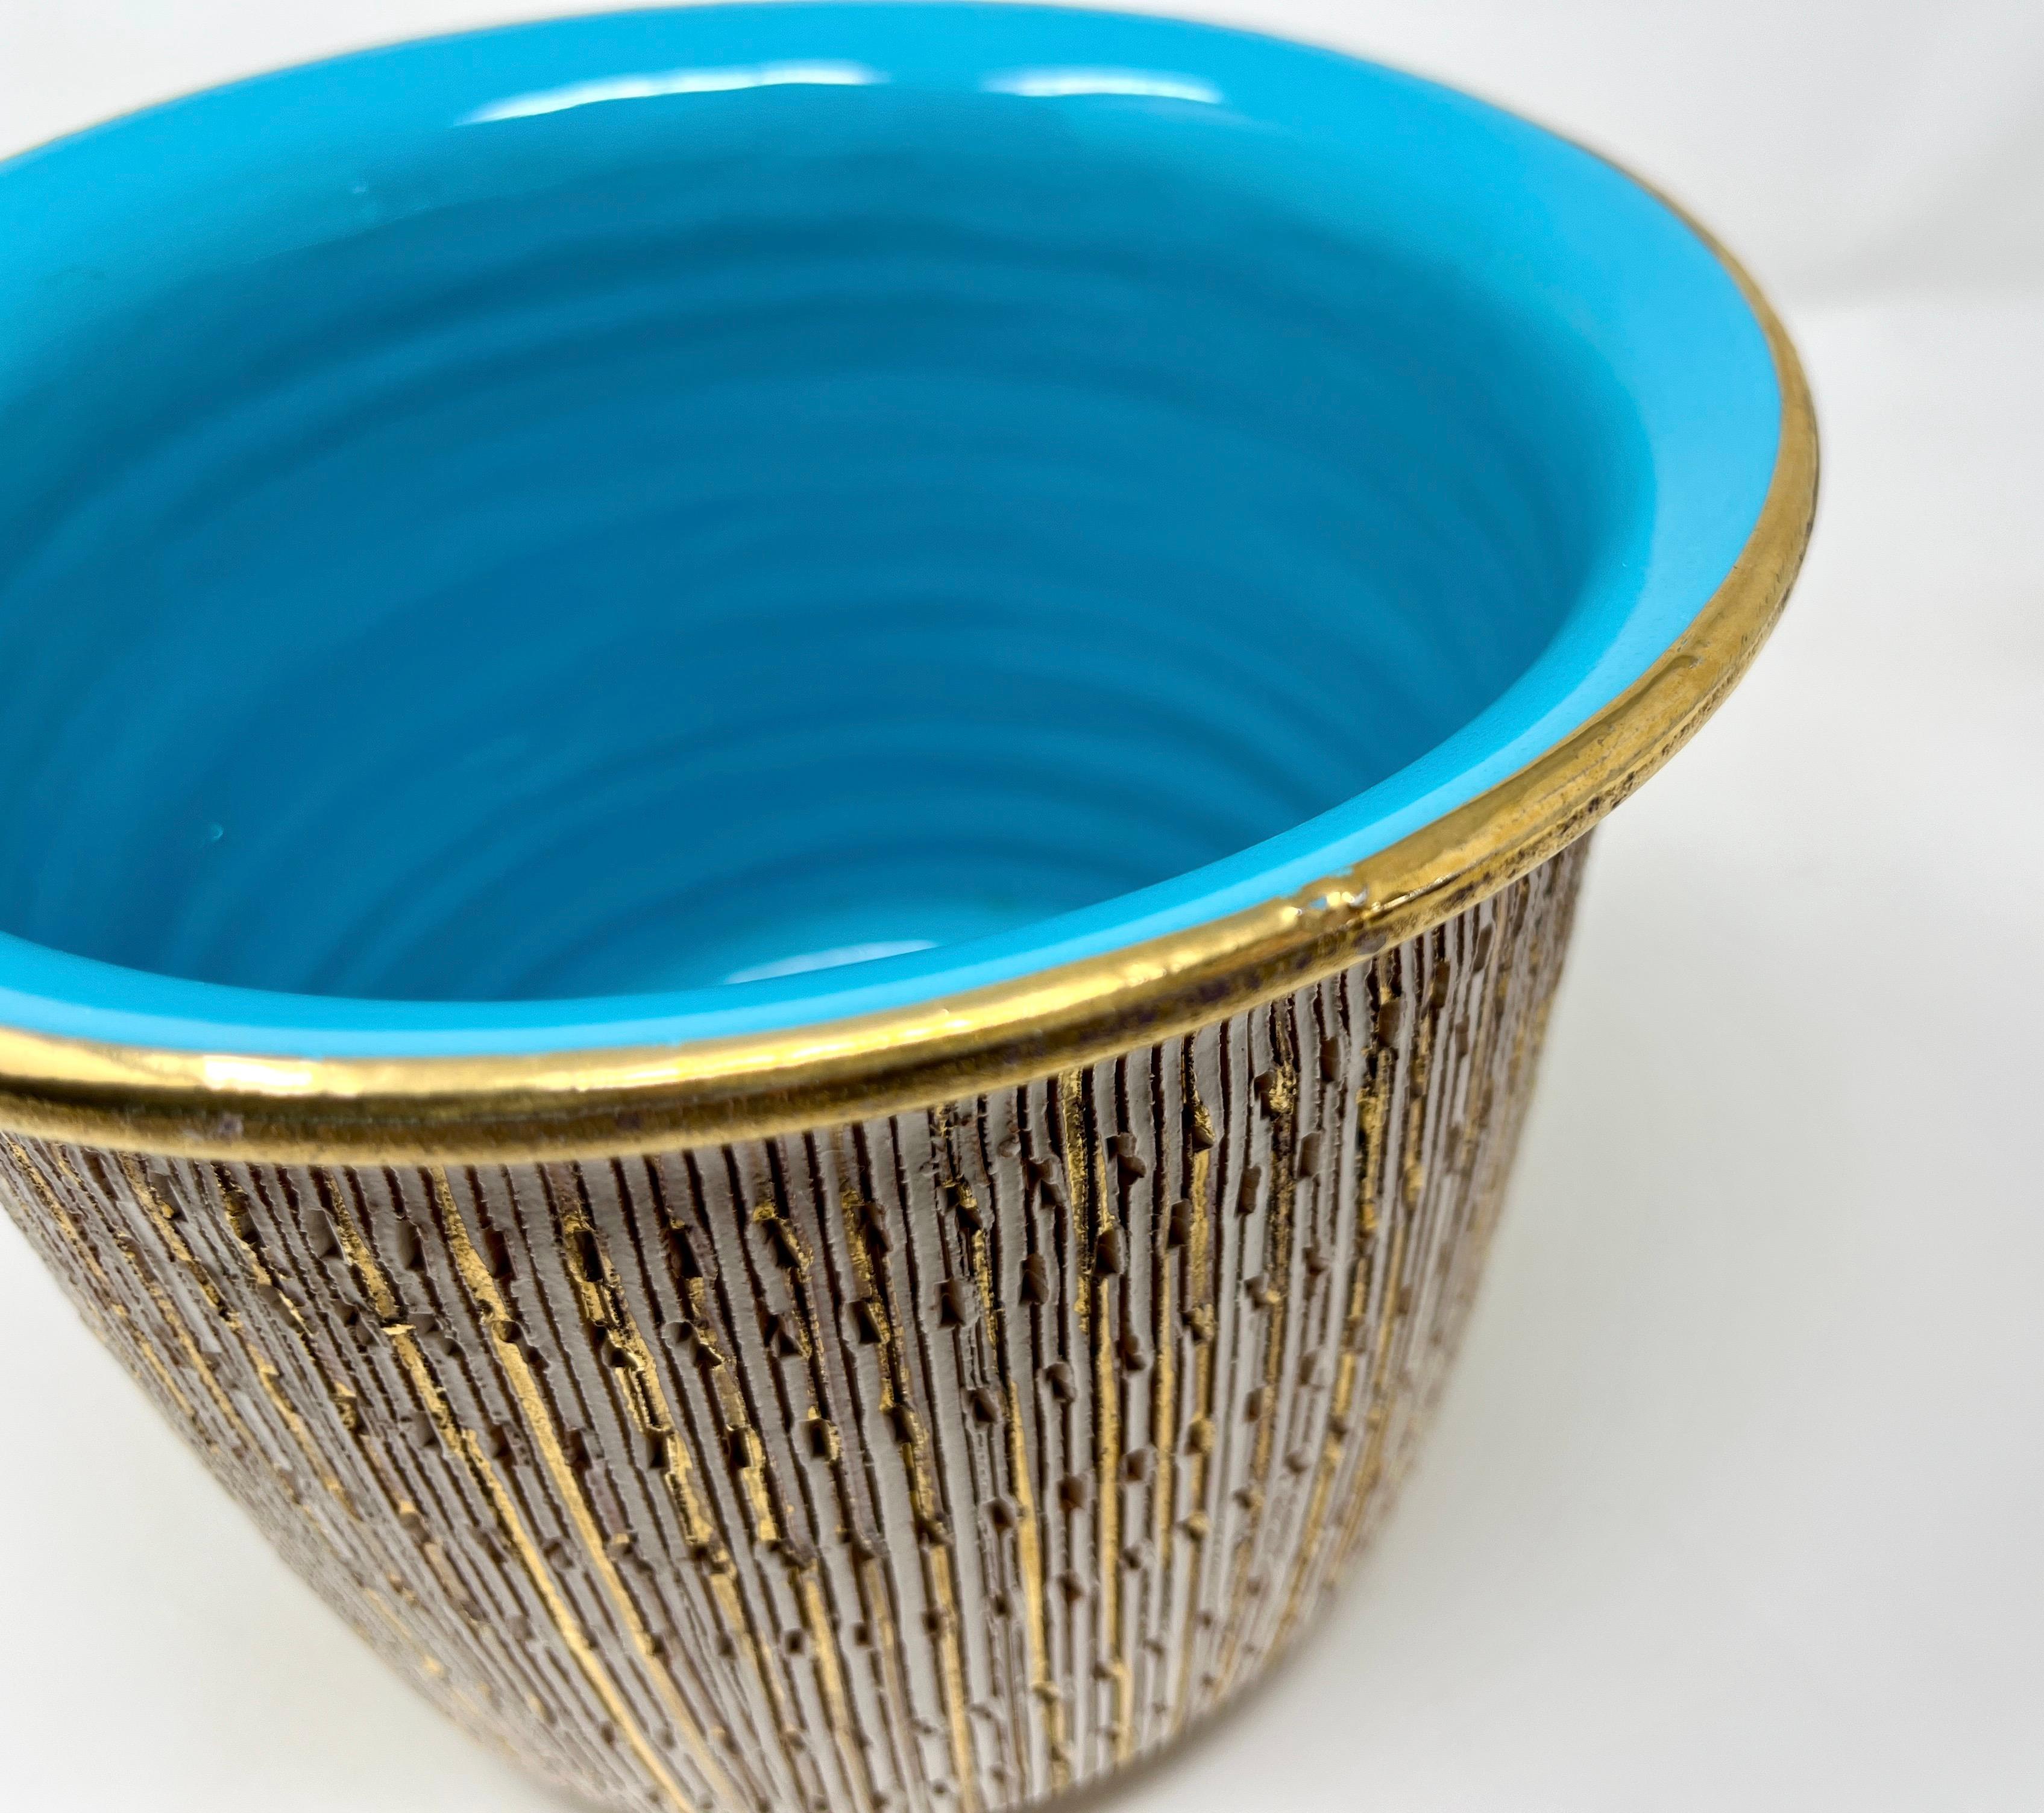 Bitossi Seta (Silk) Series Gold Turquoise Planter Pot, Aldo Londi, Sgraffito  For Sale 1